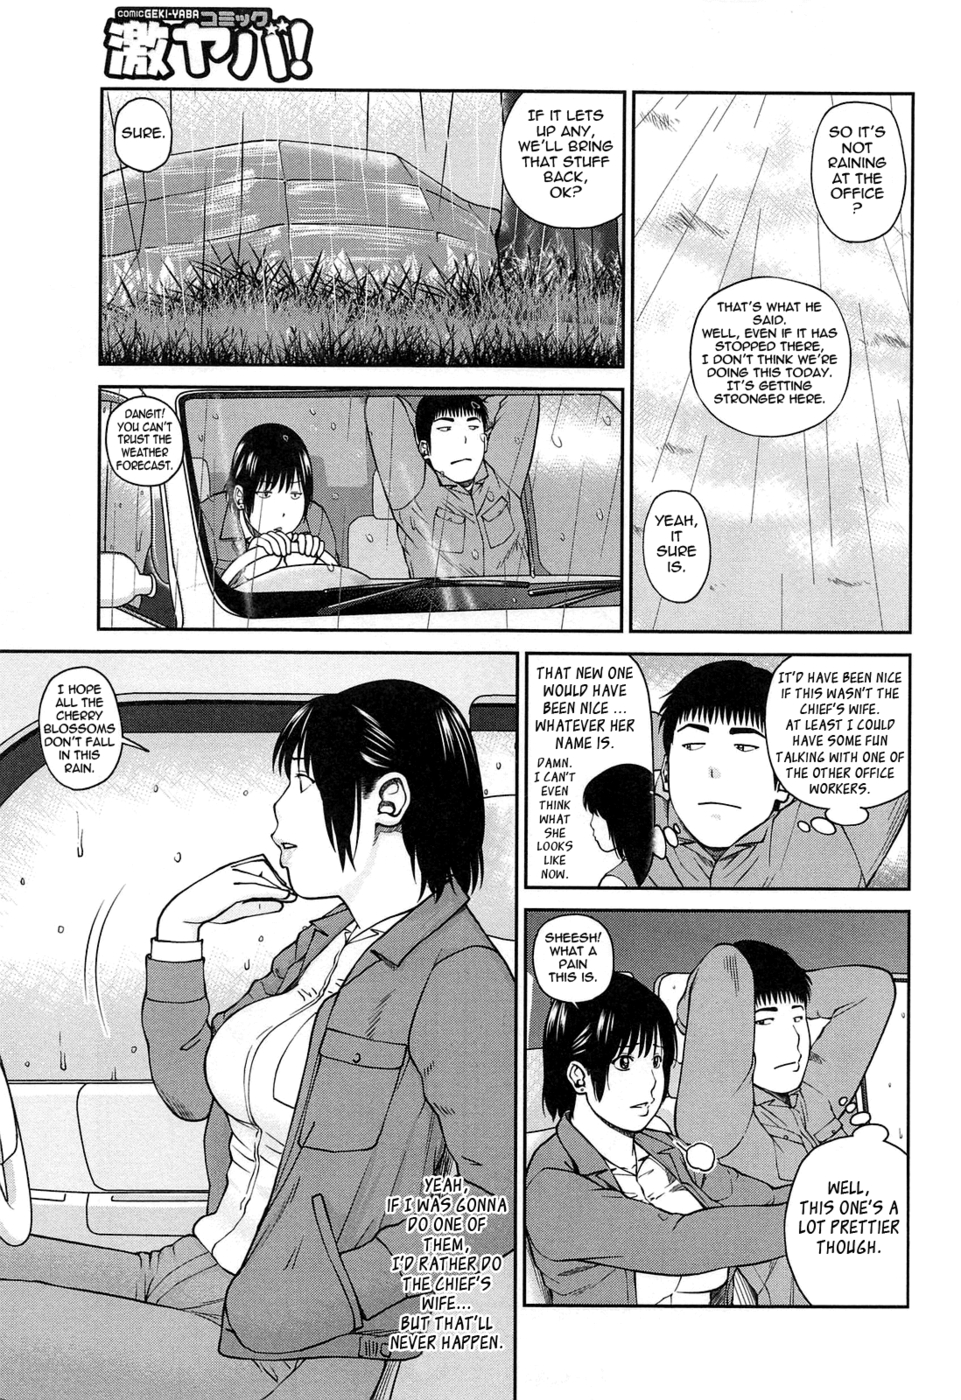 Hentai Manga Comic-35 Year Old Ripe Wife-Chapter 1-Wet Wife (First Half)-7